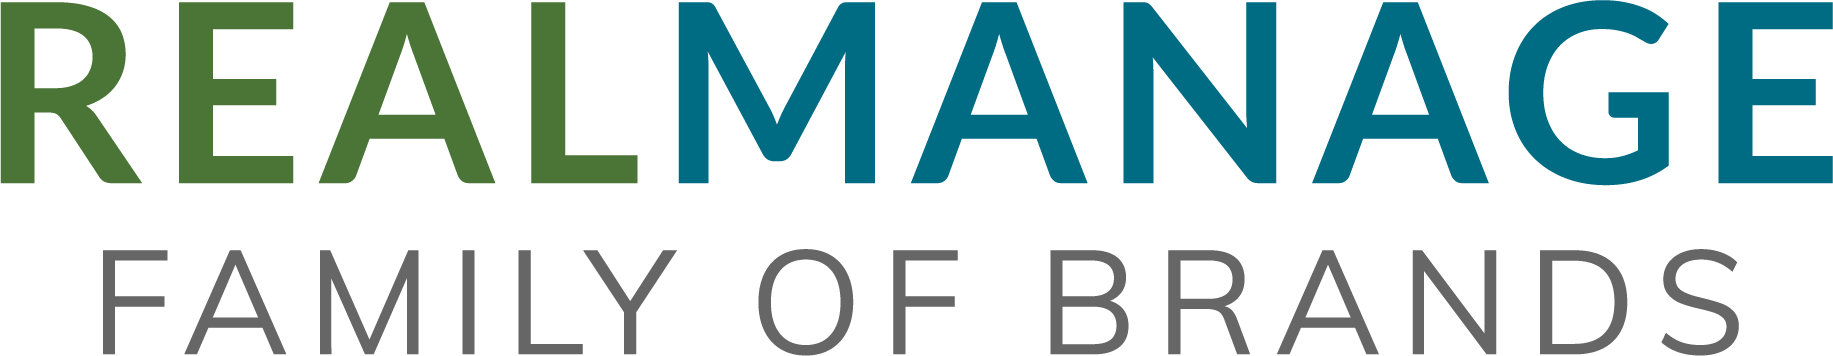 RealManage Family of Brands - Washington logo